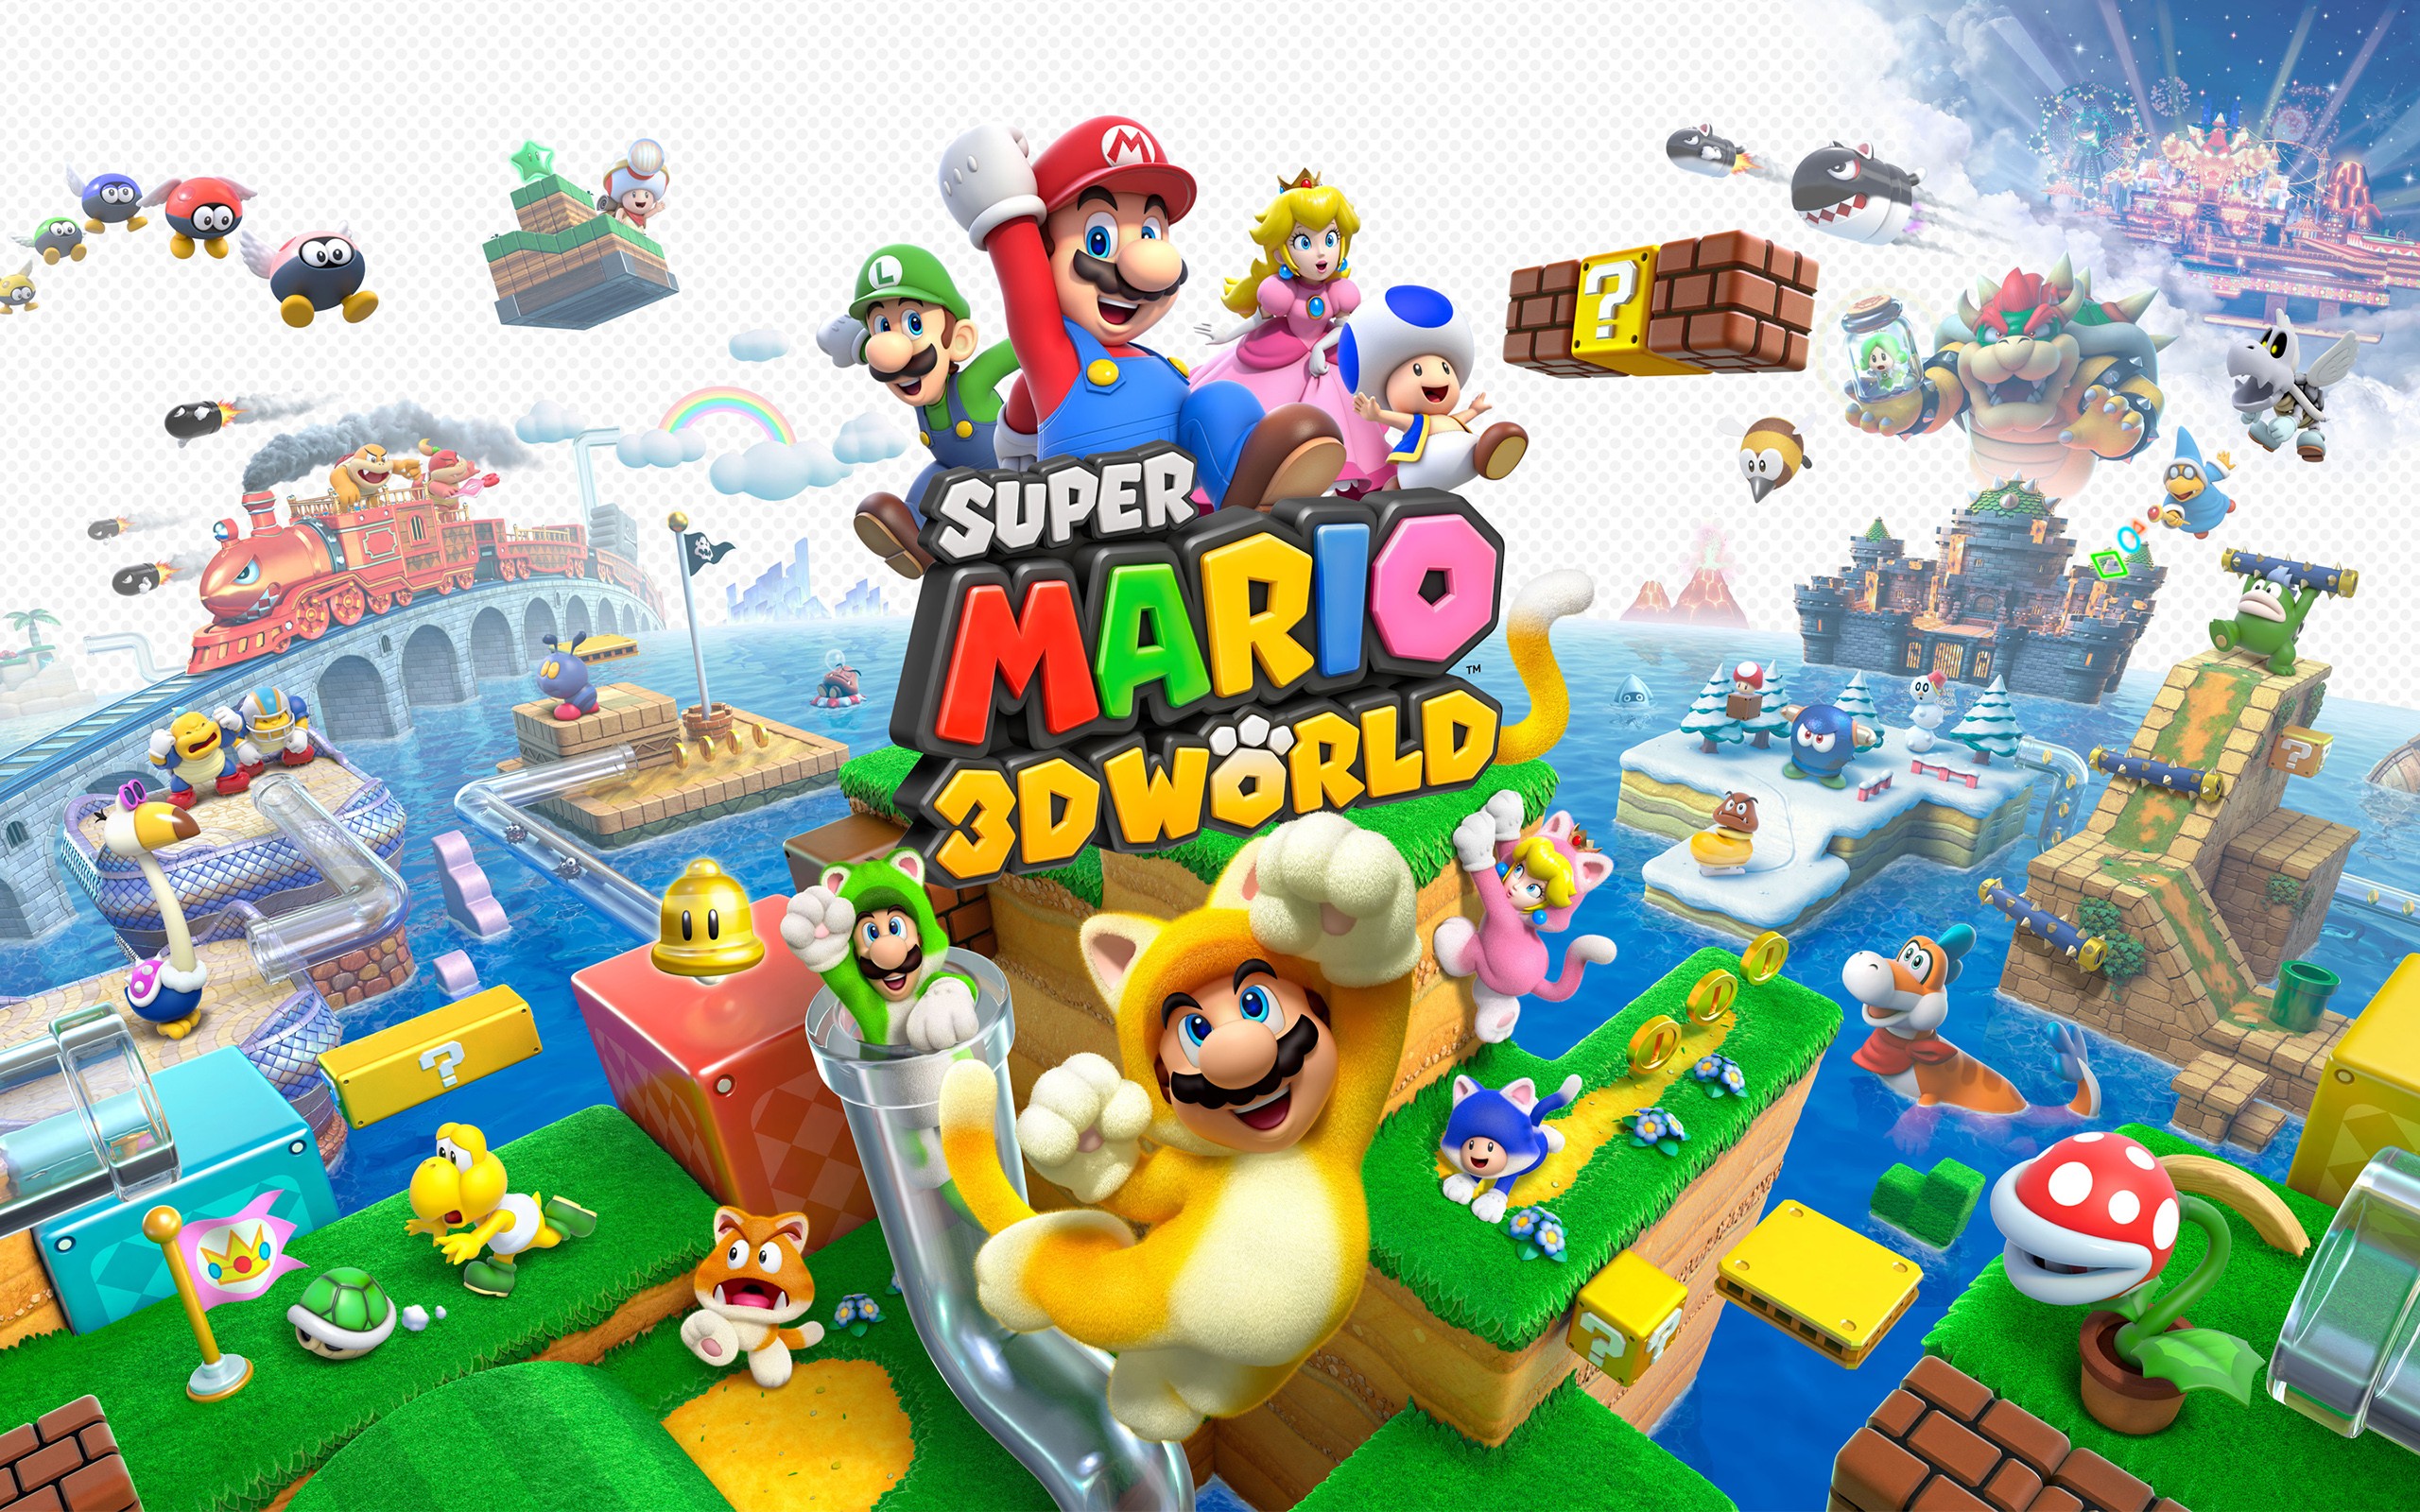 Super Mario Bros., Video Games, Luigi, Princess Peach, Toad (character), Super Mario 3D World Wallpaper